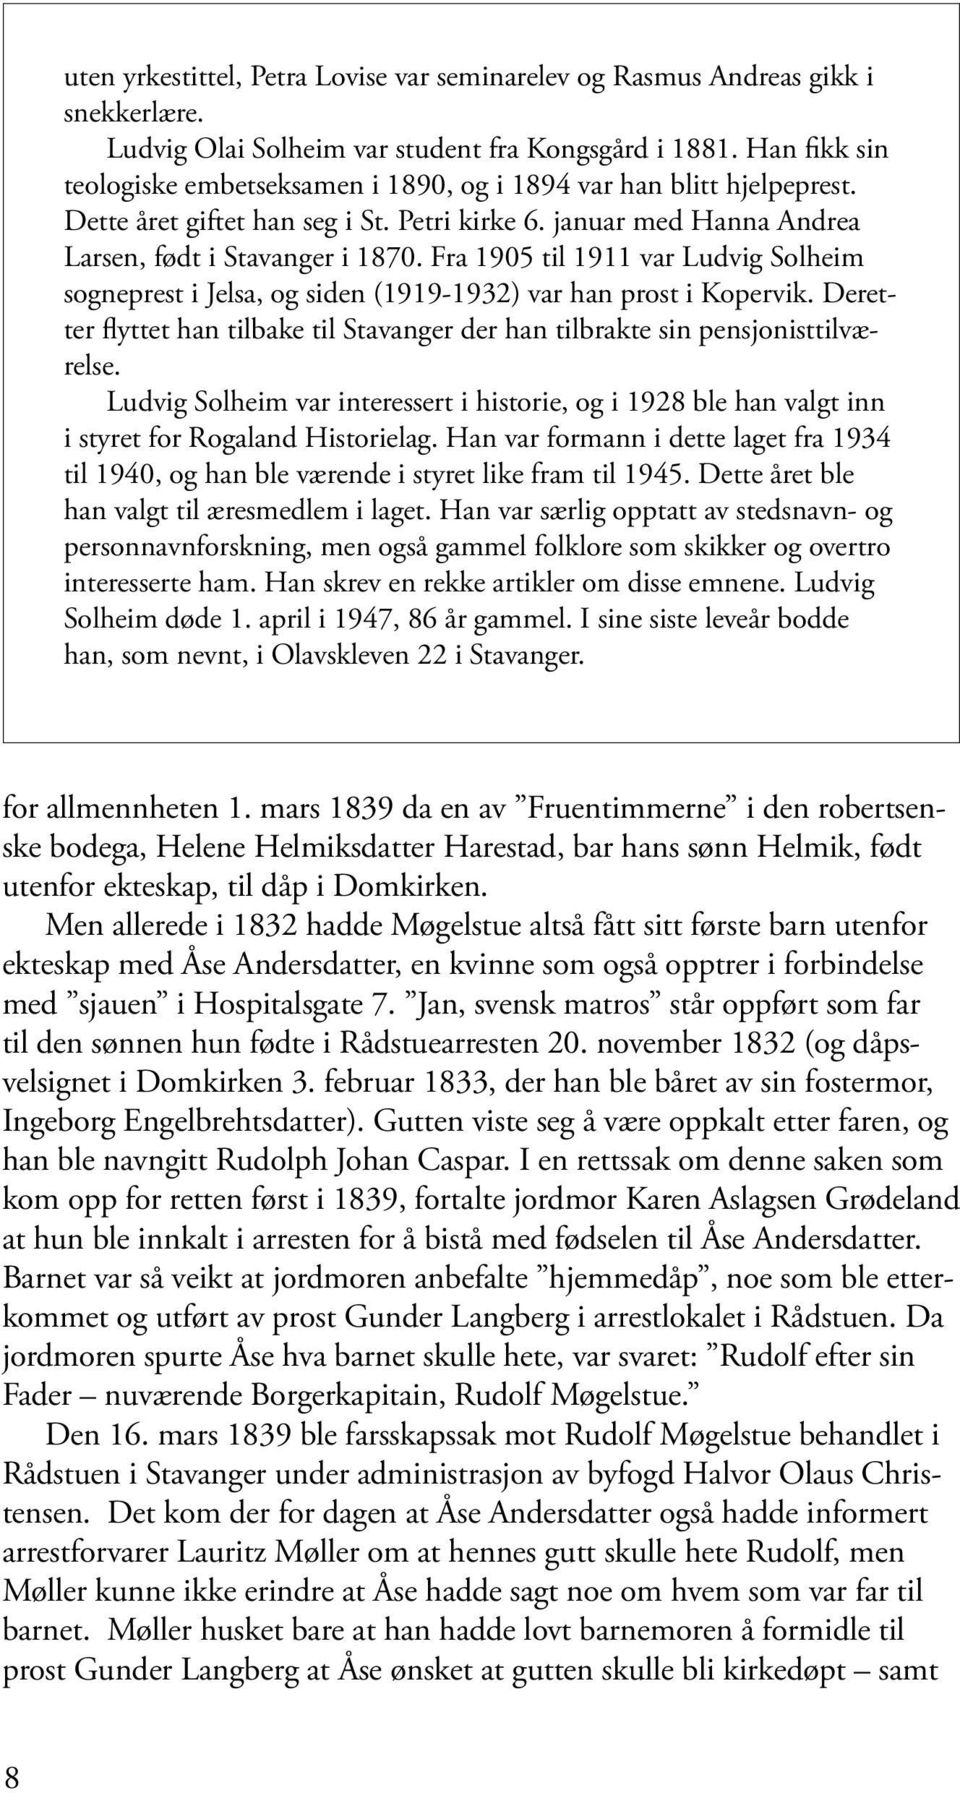 Fra 1905 til 1911 var Ludvig Solheim sogneprest i Jelsa, og siden (1919-1932) var han prost i Kopervik. Deretter flyttet han tilbake til Stavanger der han tilbrakte sin pensjonisttilværelse.